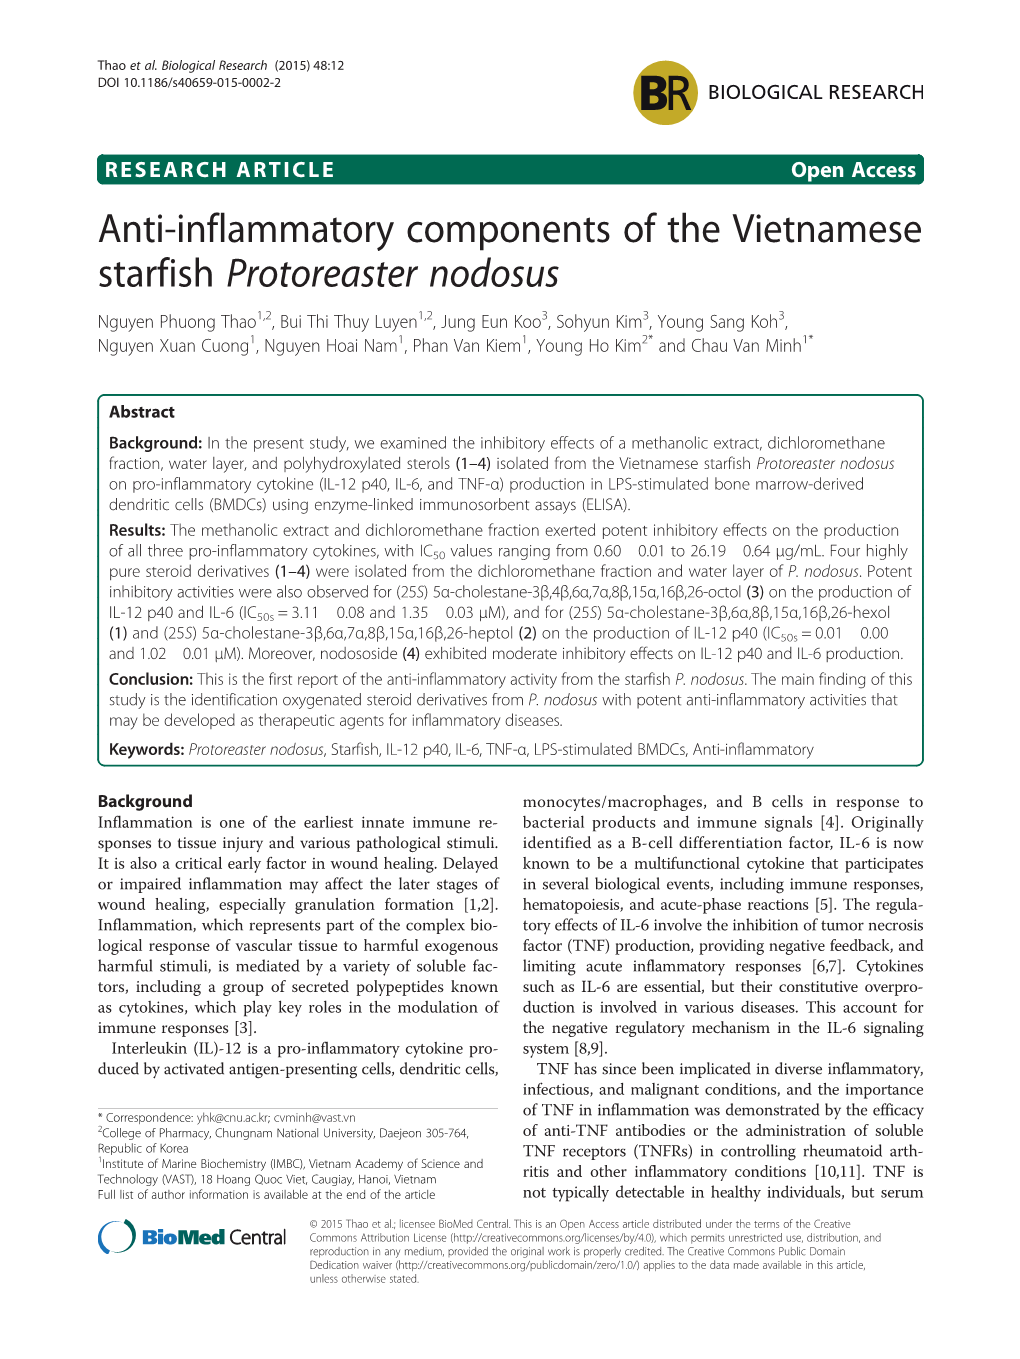 Anti-Inflammatory Components of the Vietnamese Starfish Protoreaster Nodosus